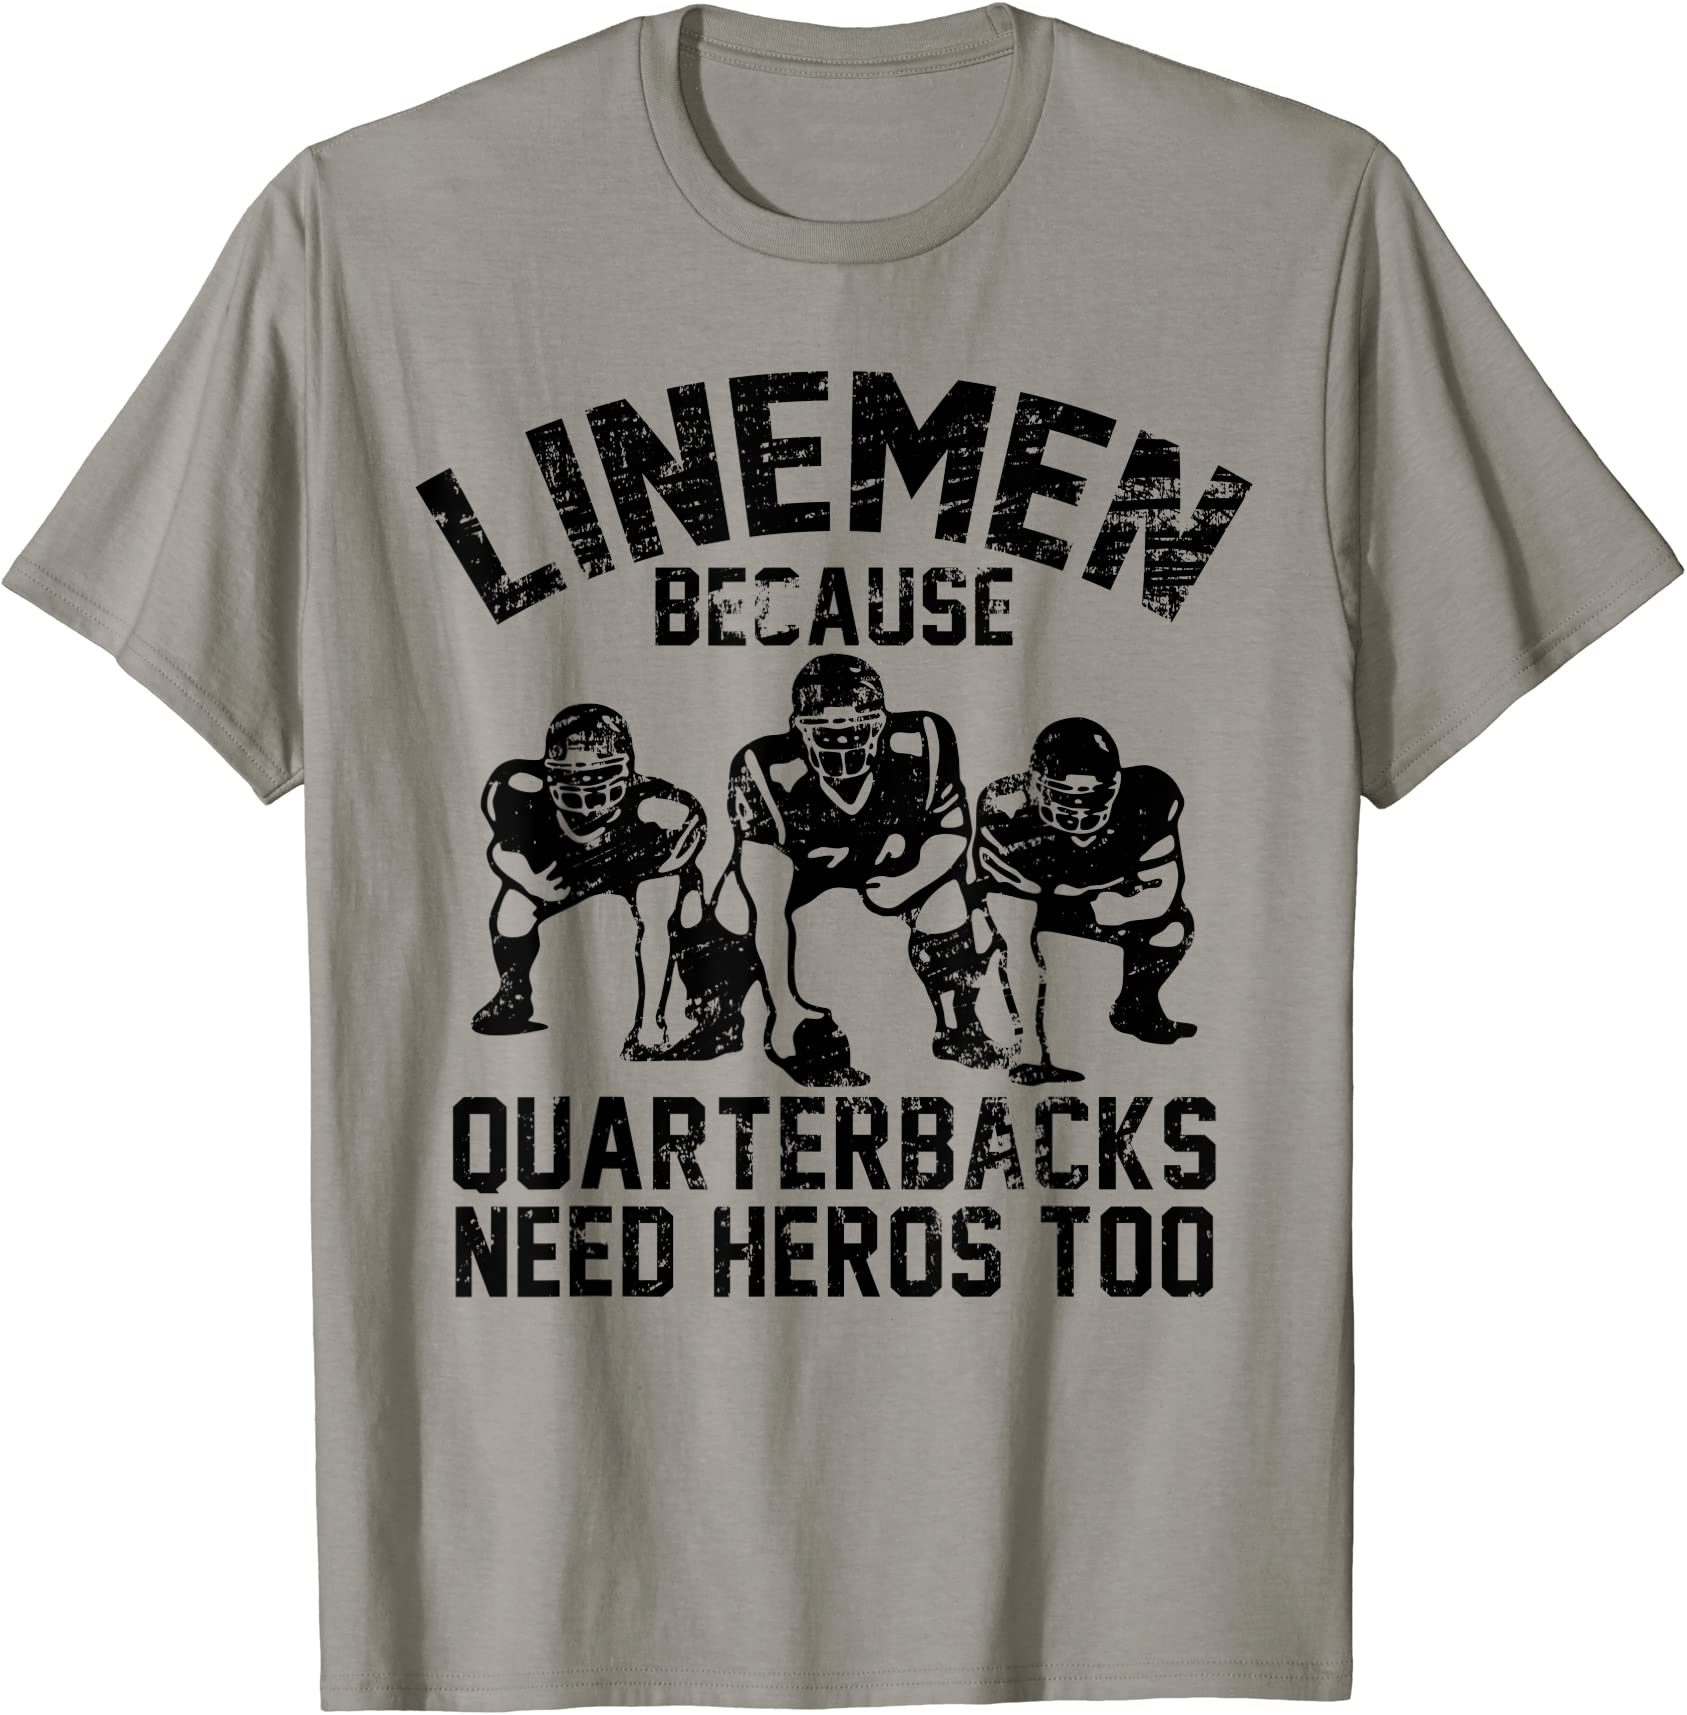 linemen because quarterbacks need heros too football t shirt men - Buy ...